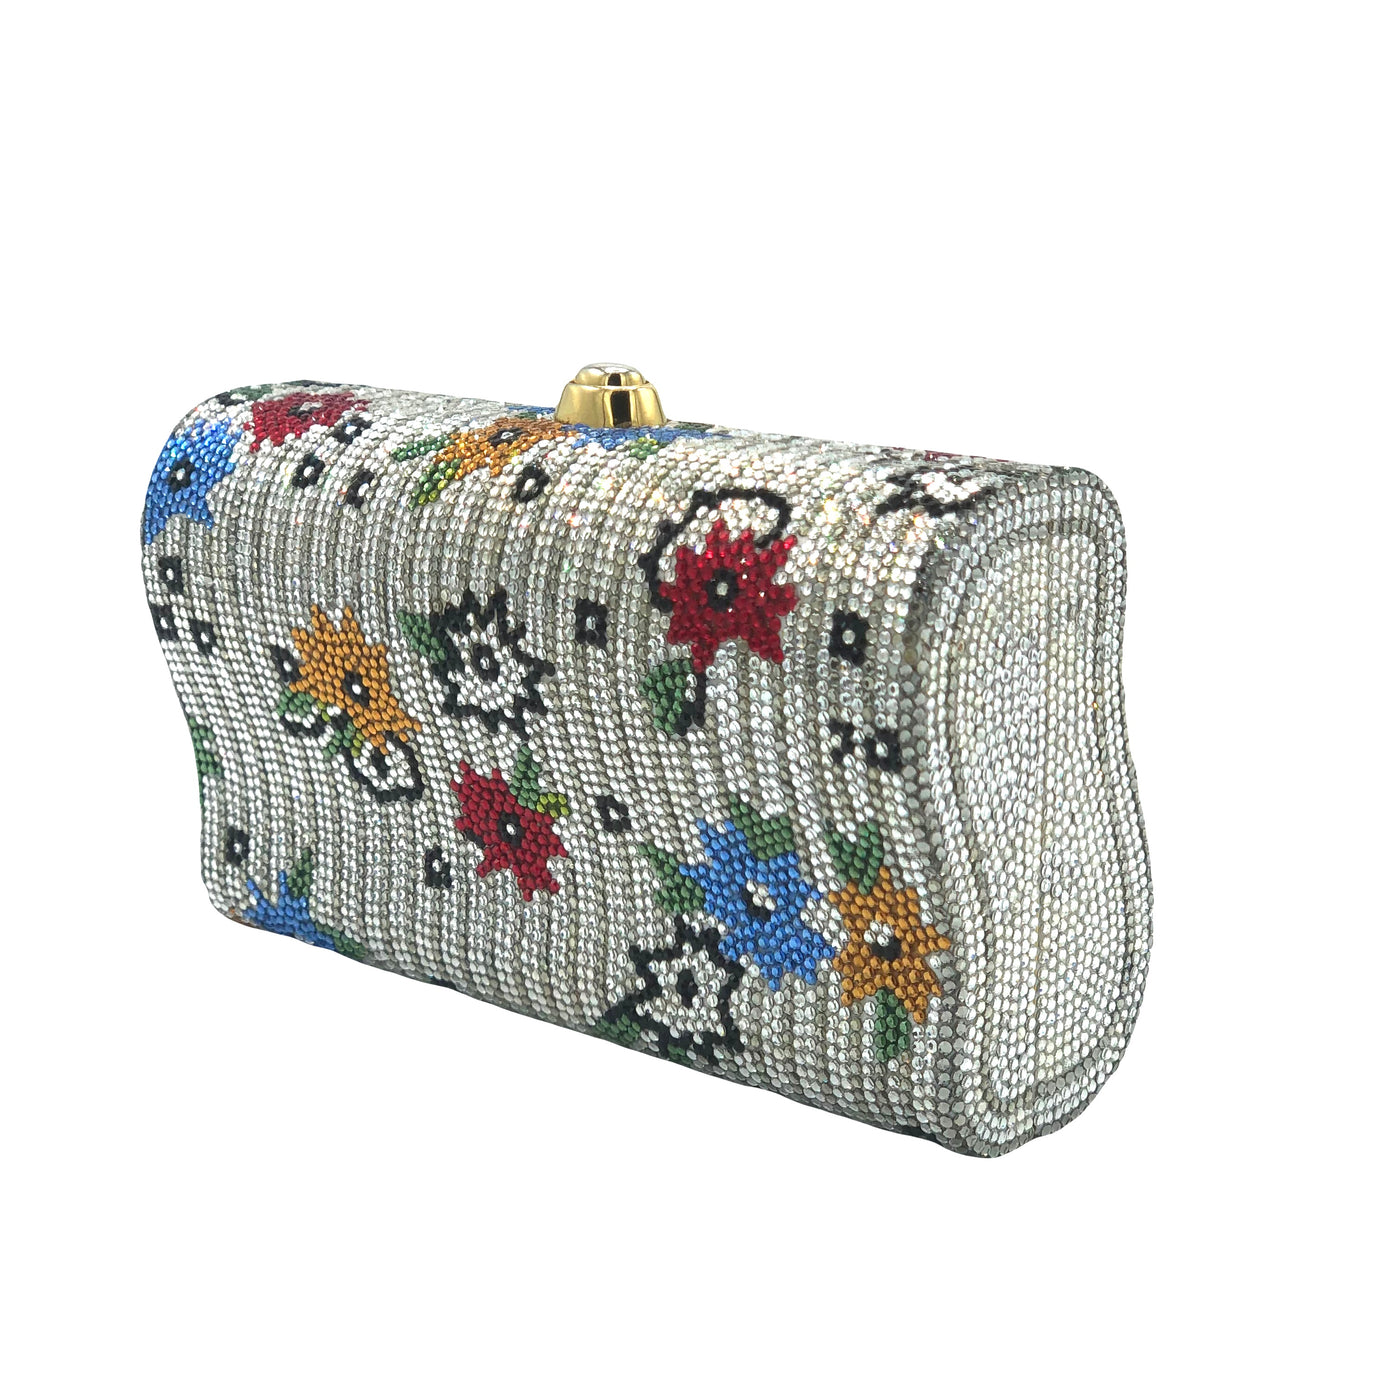 JUDITH LEIBER Floral Swaroski Minaudiere Clutch Bag RRP: £2500